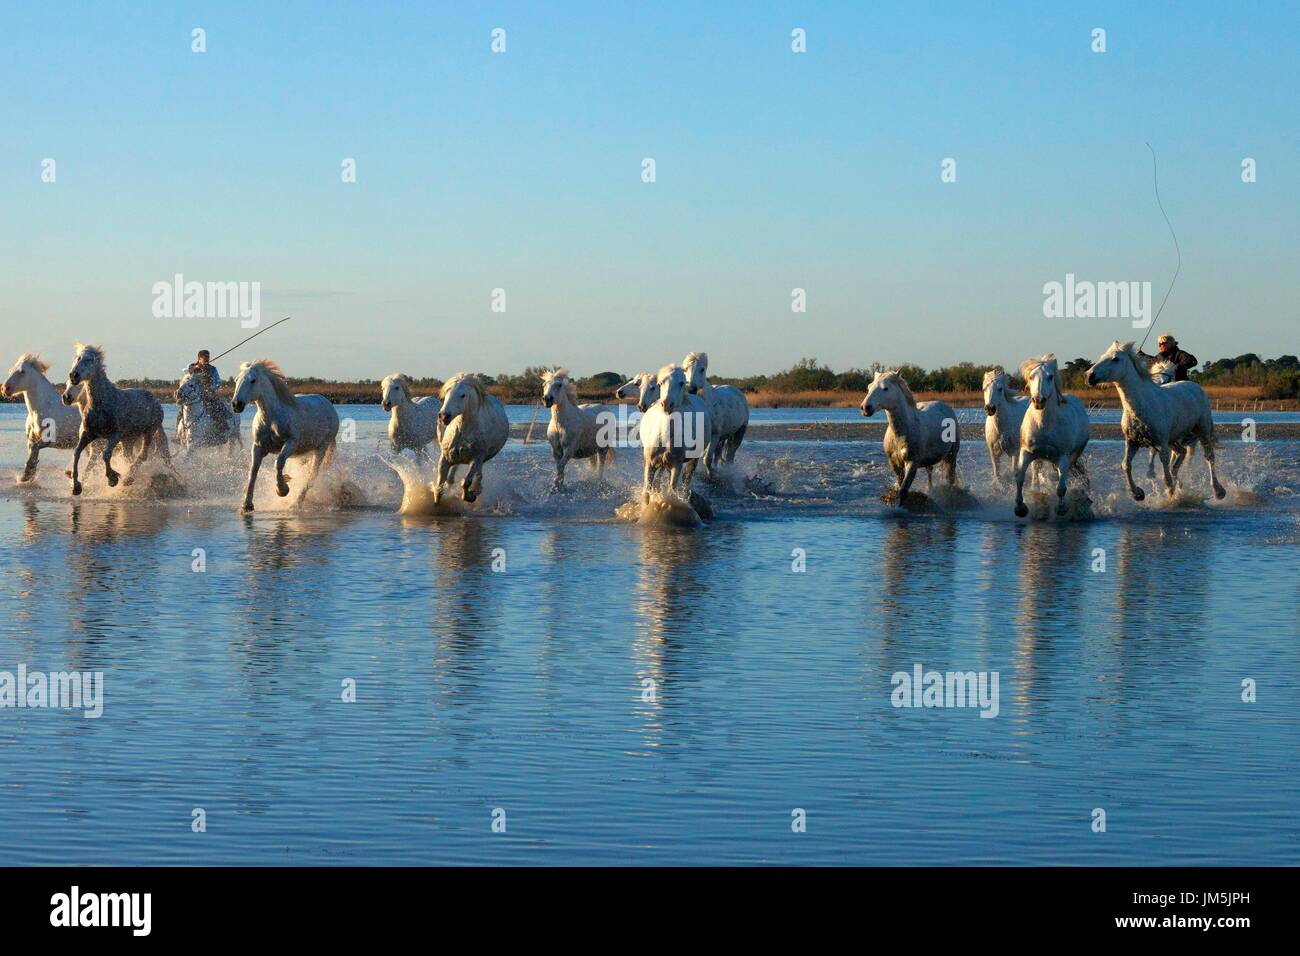 White Horses Camarque, France Stock Photo